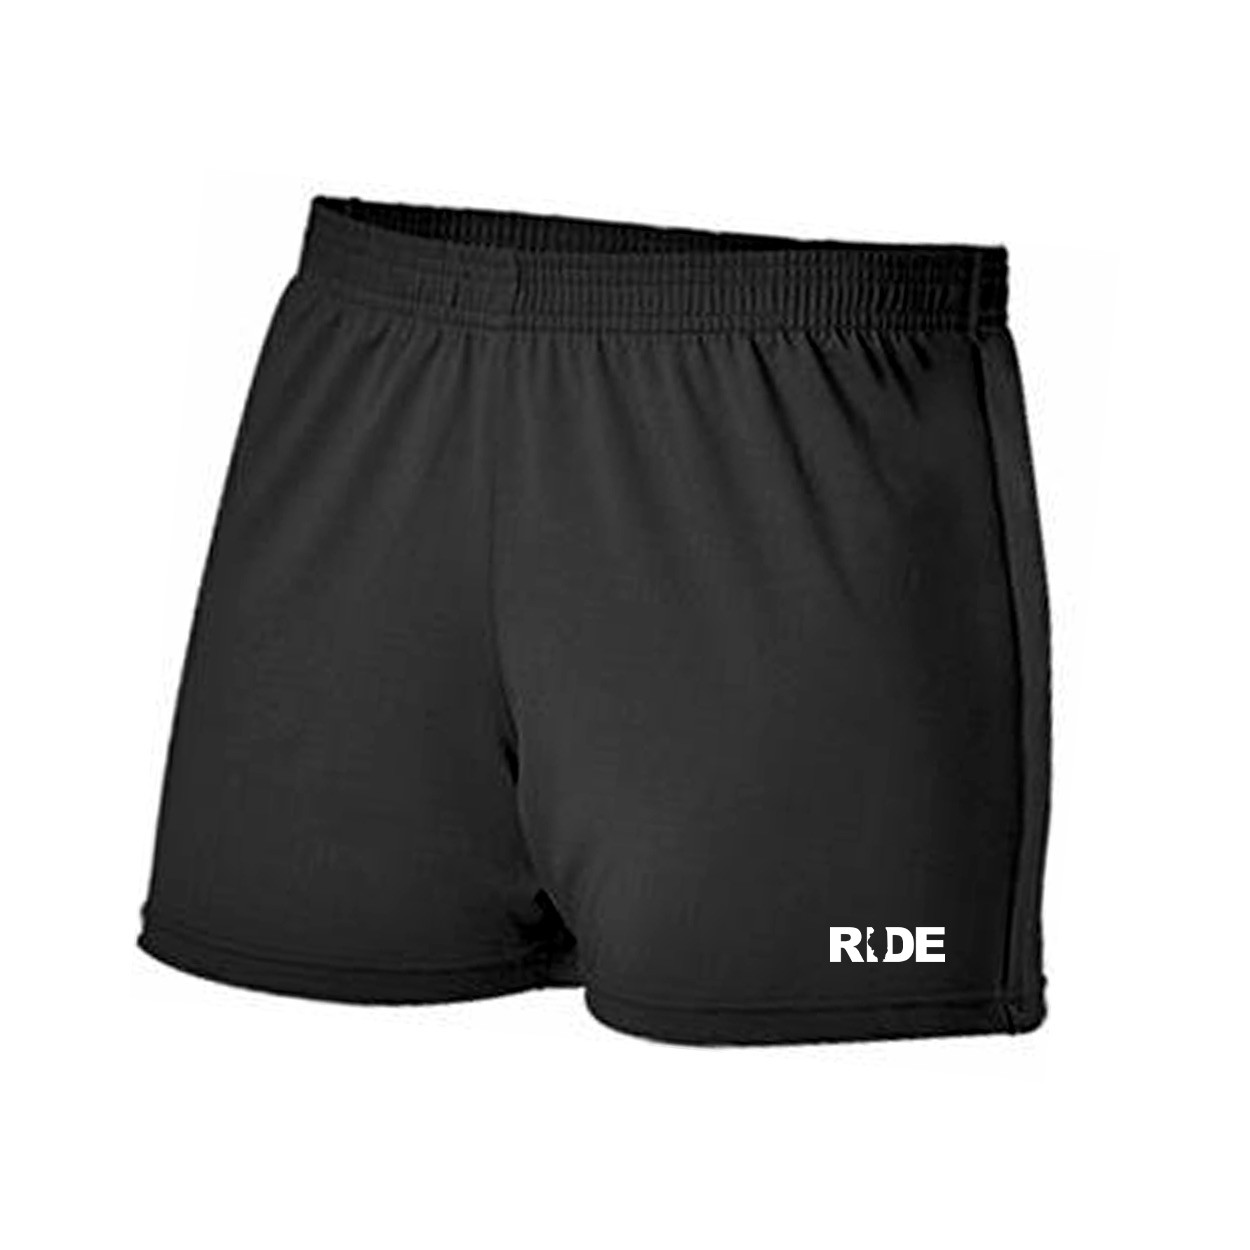 Ride Illinois Classic Women's Cheer Shorts Black (White Logo)